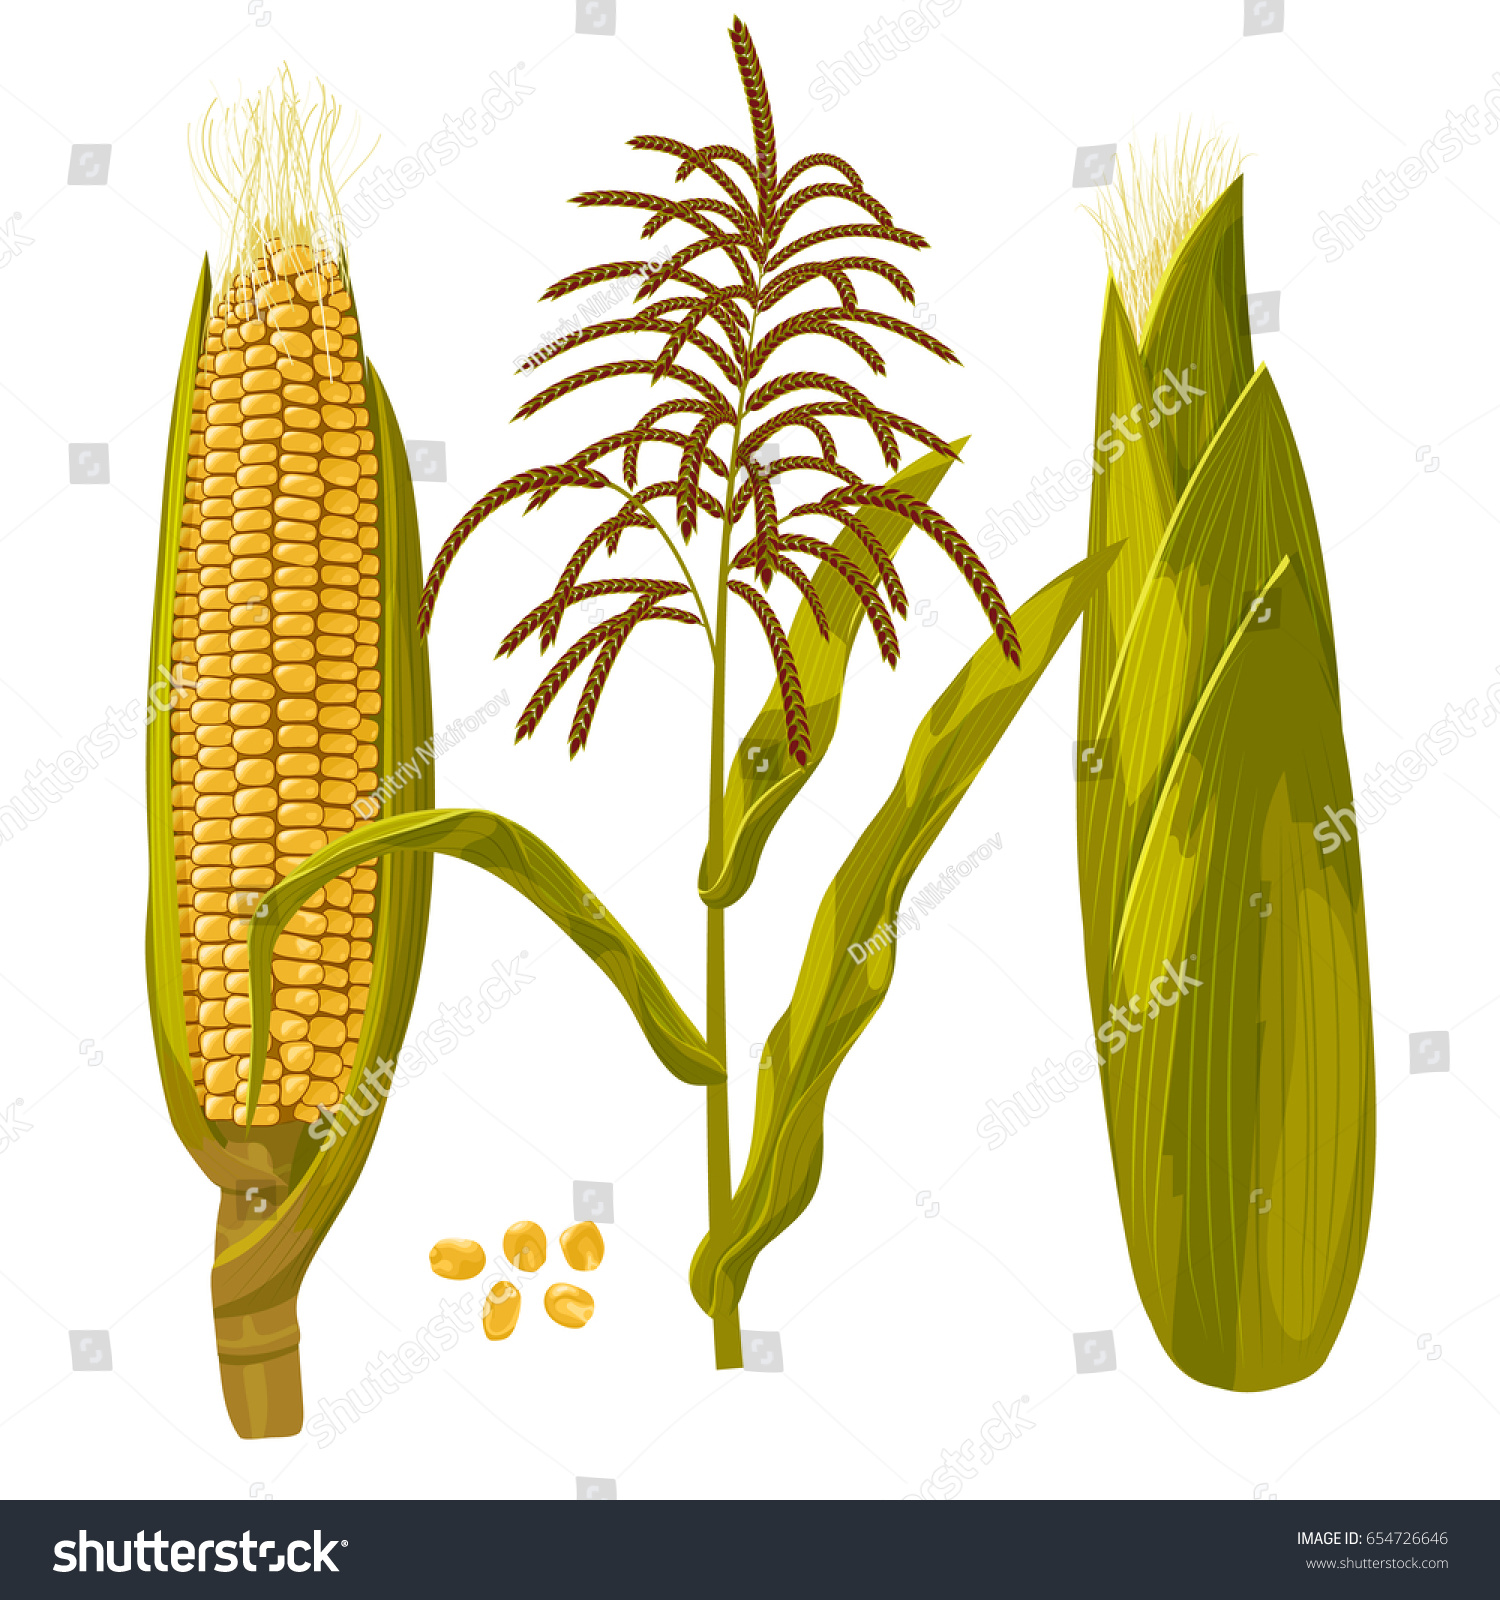 Corn Maize Set Vector Illustration Maize Stock Vector (Royalty Free ...